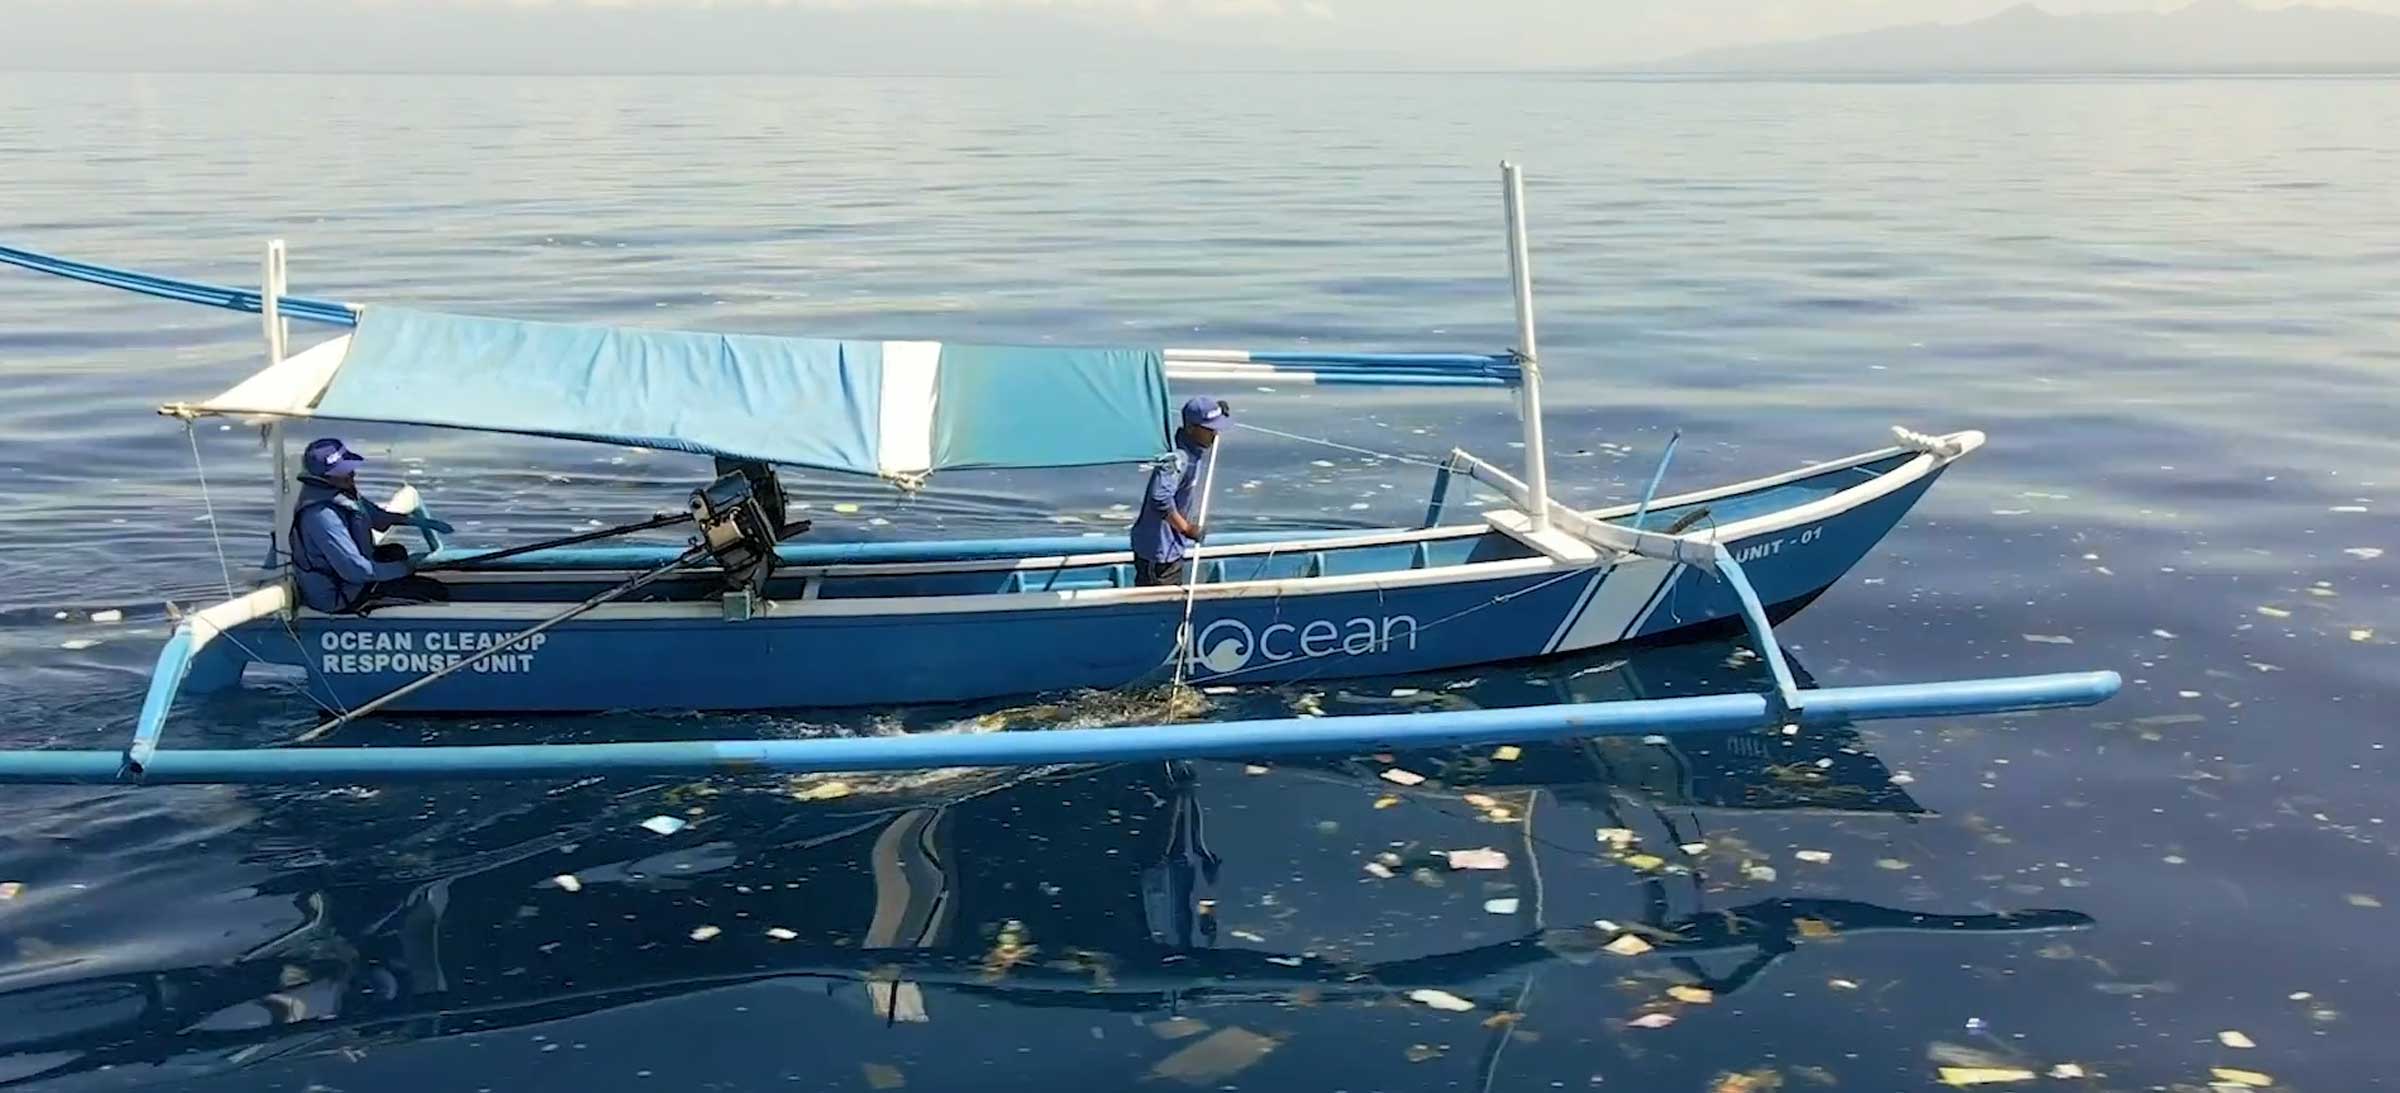 4Ocean Bracelets Remove 9 Million Pounds of Ocean Trash  Bead the Change